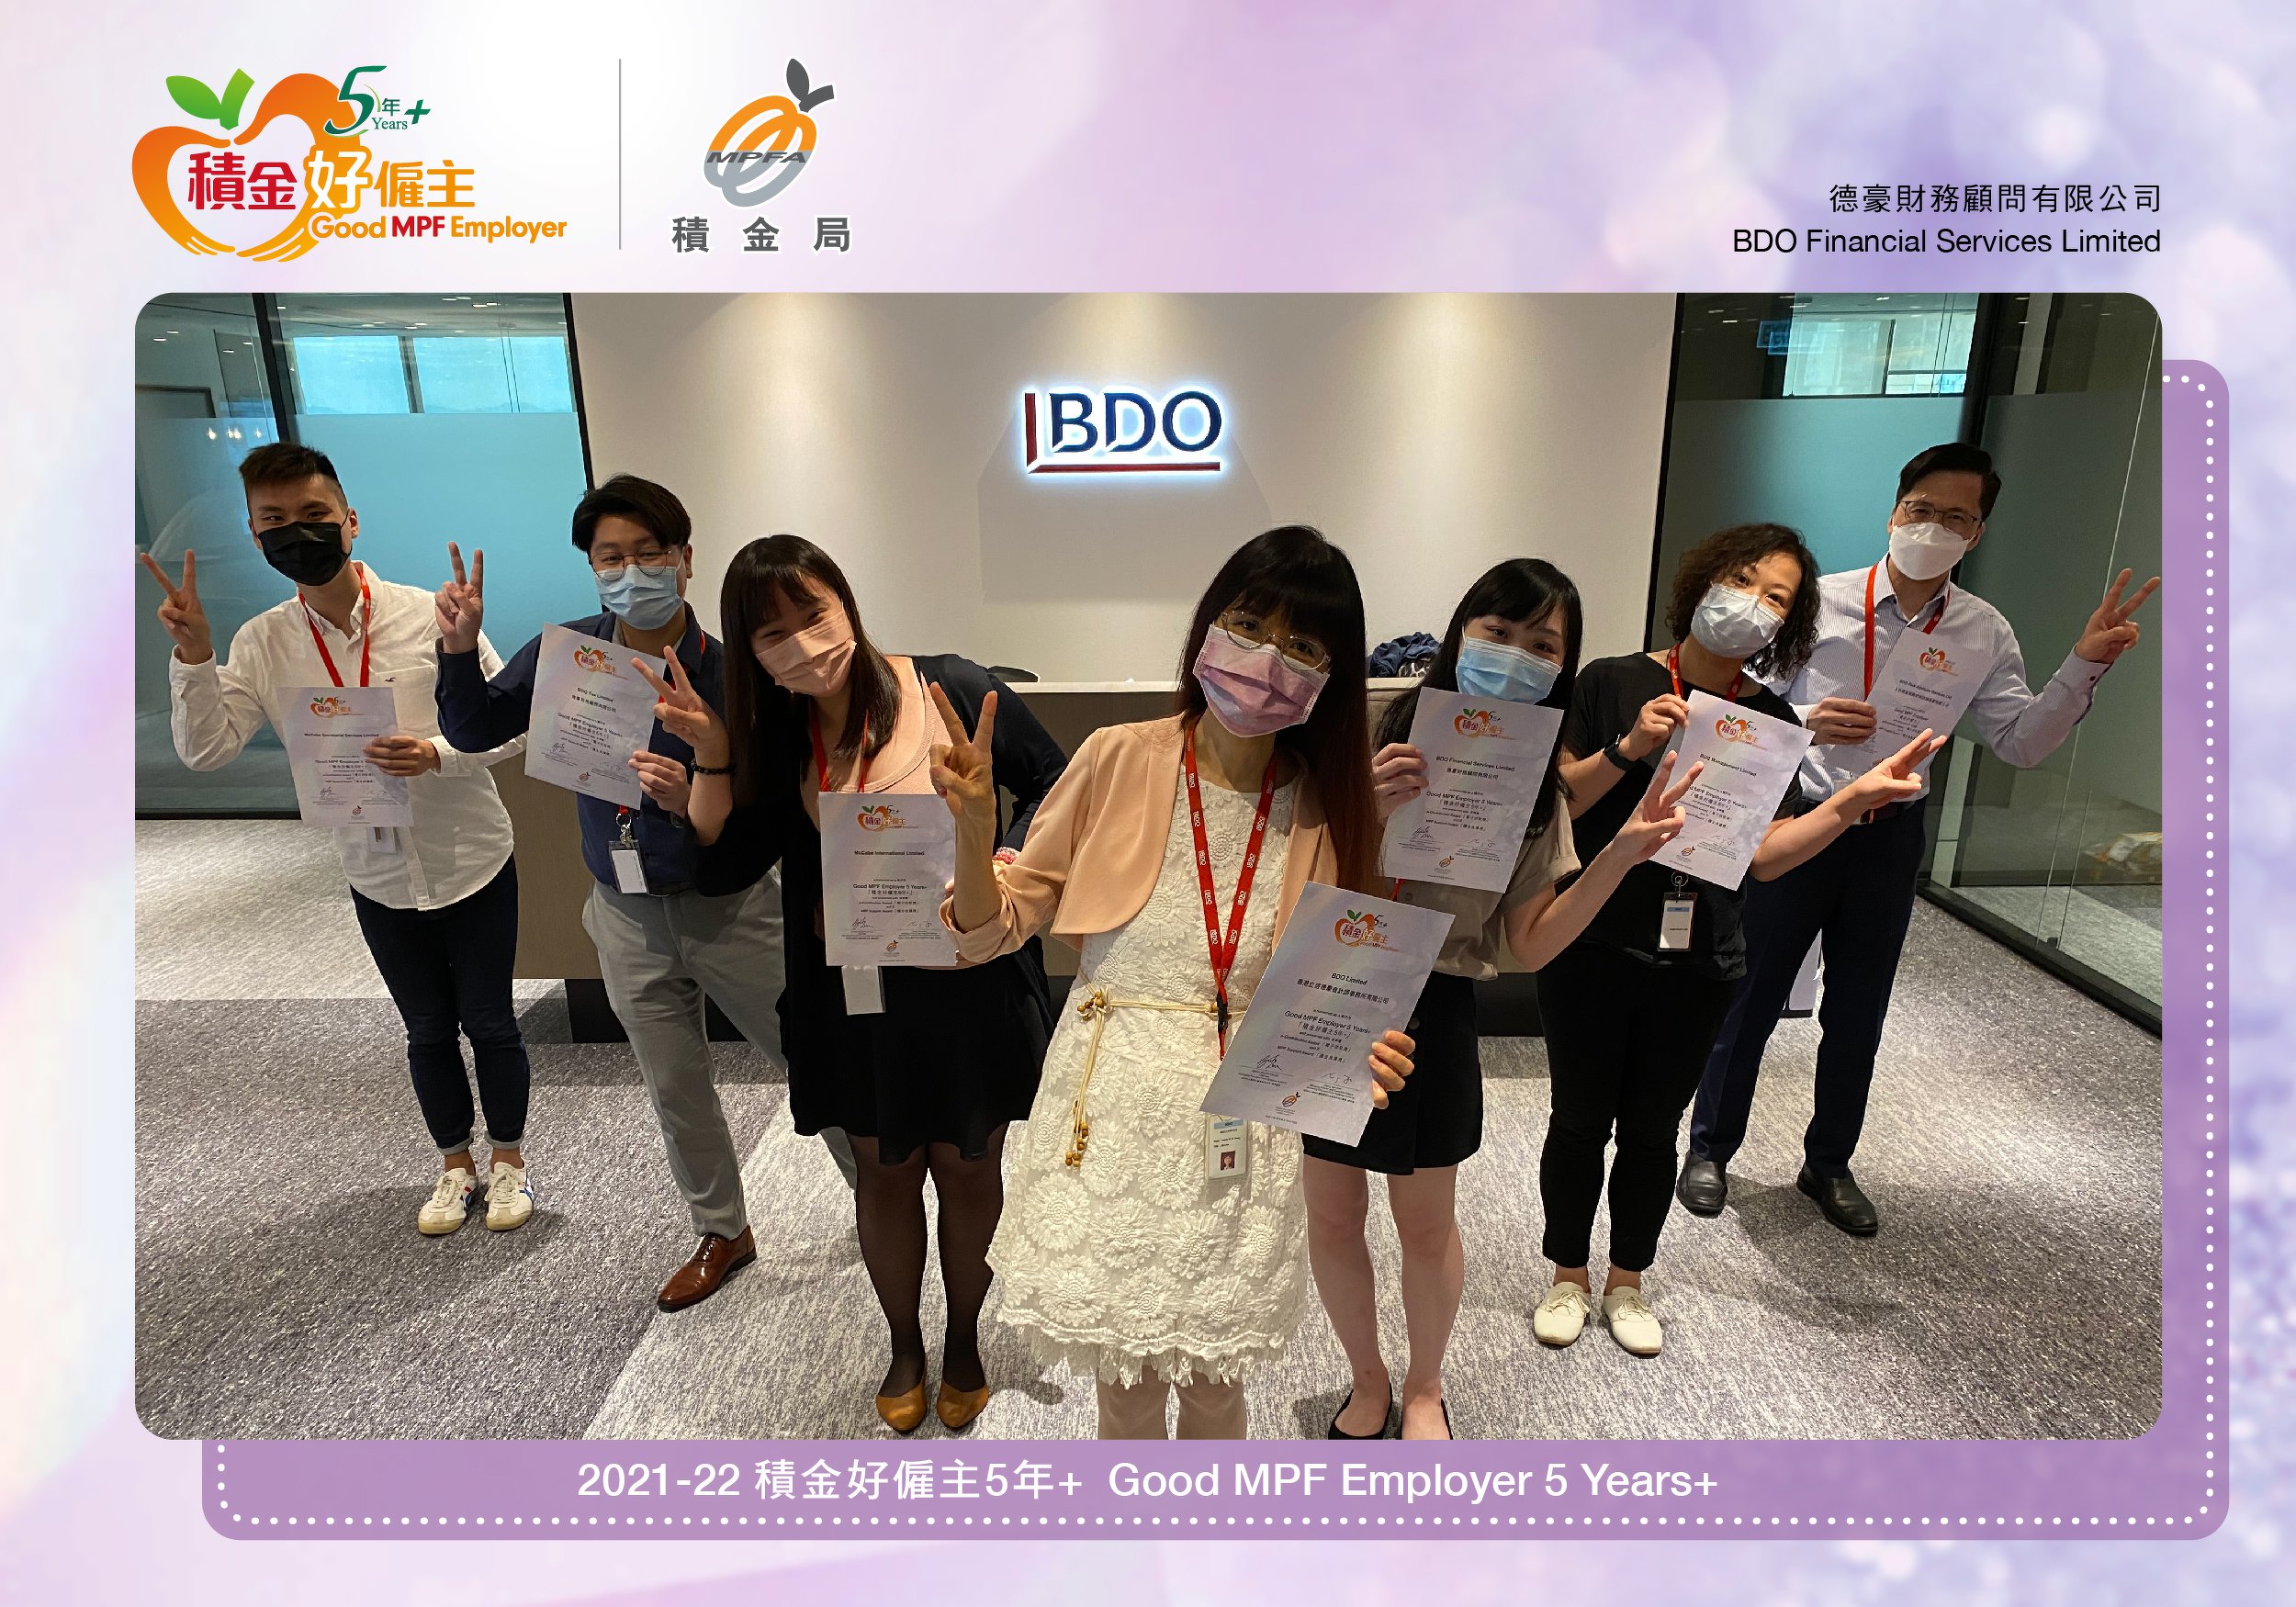 BDO Financial Services Limited 德豪財務顧問有限公司